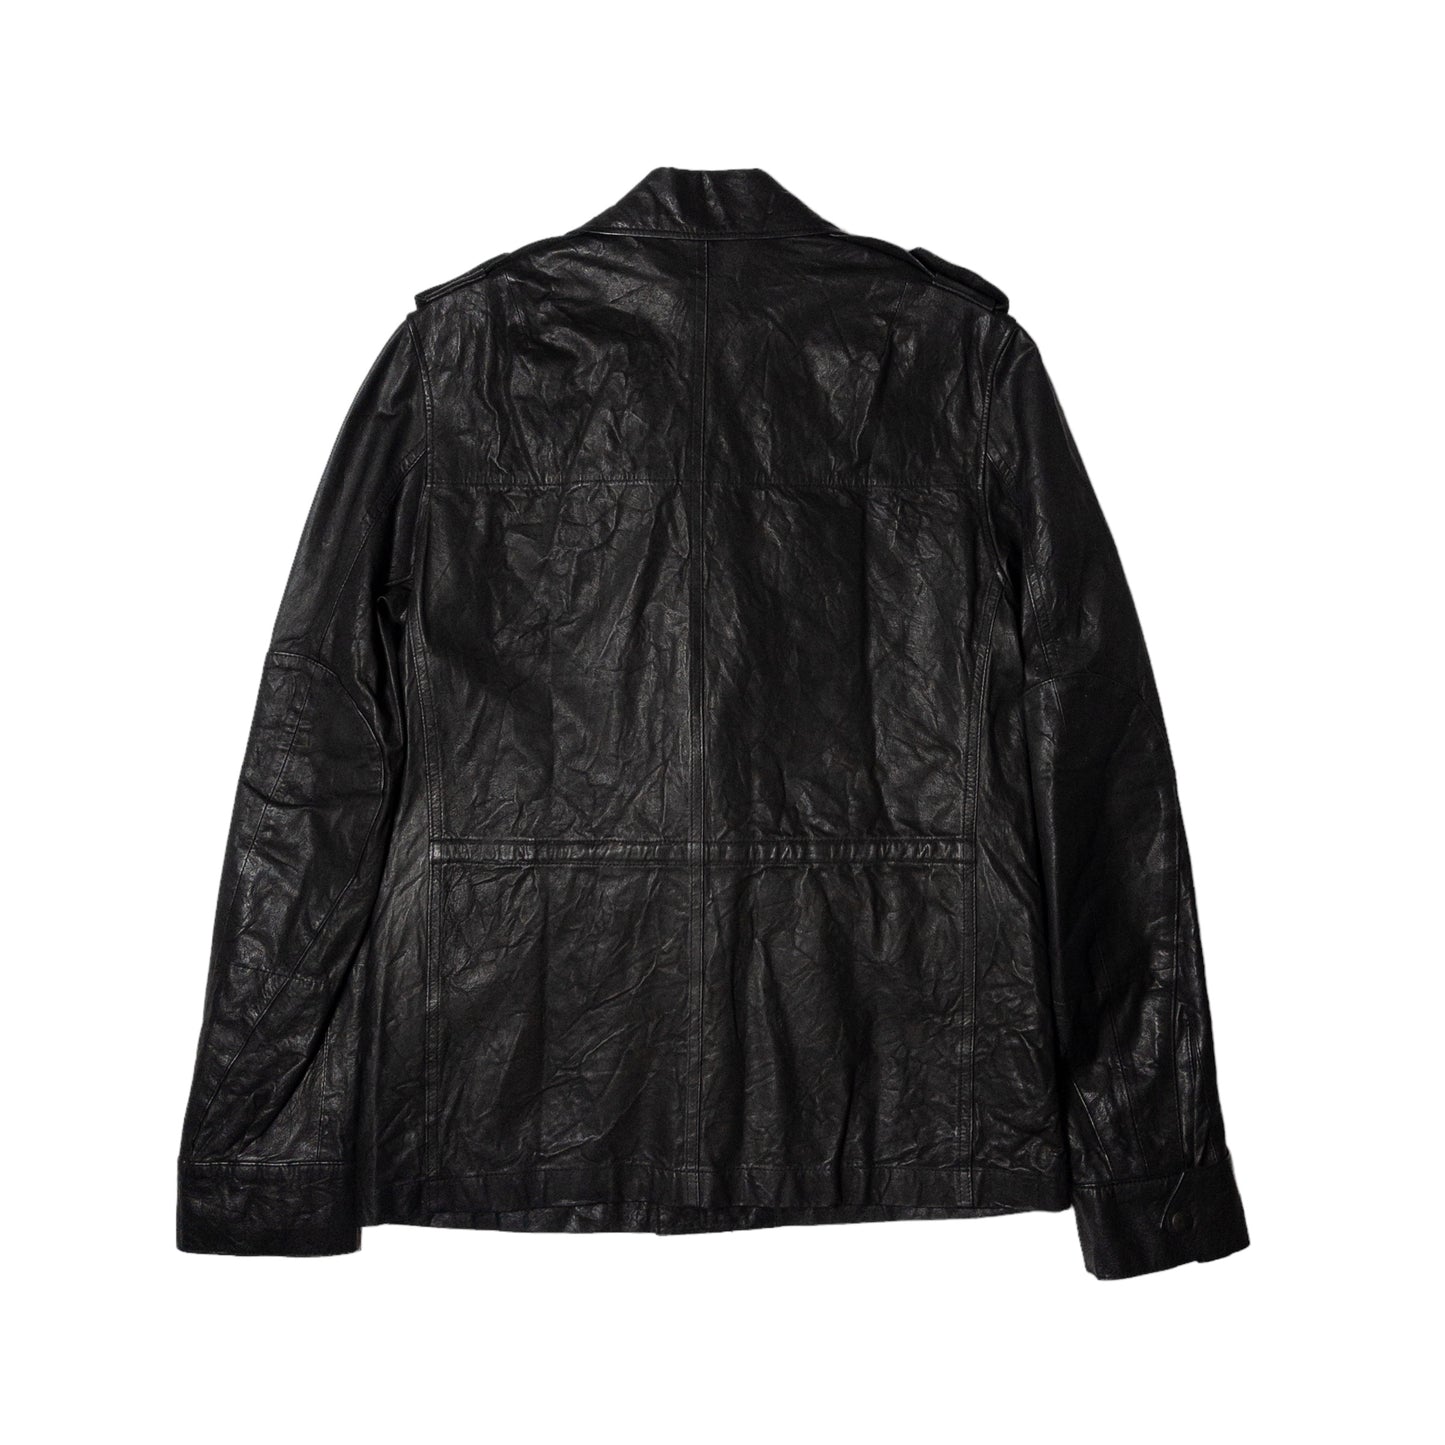 Balmain SS10 Decarnin Militant Leather Jacket